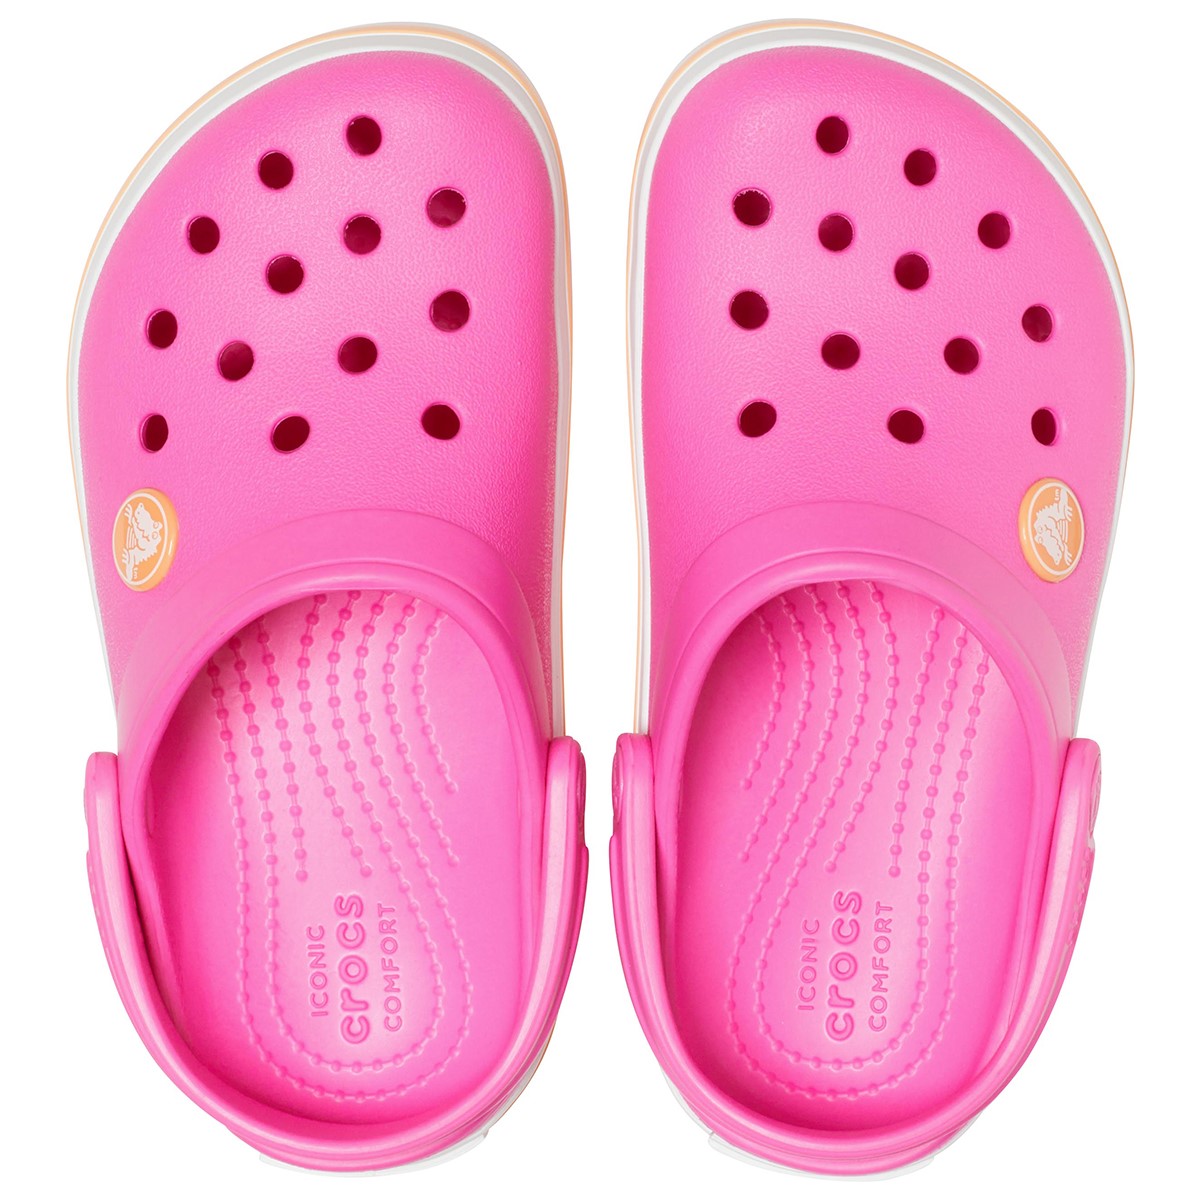 Crocs Sandalet 204537 Electric Pink/Cantaloupe